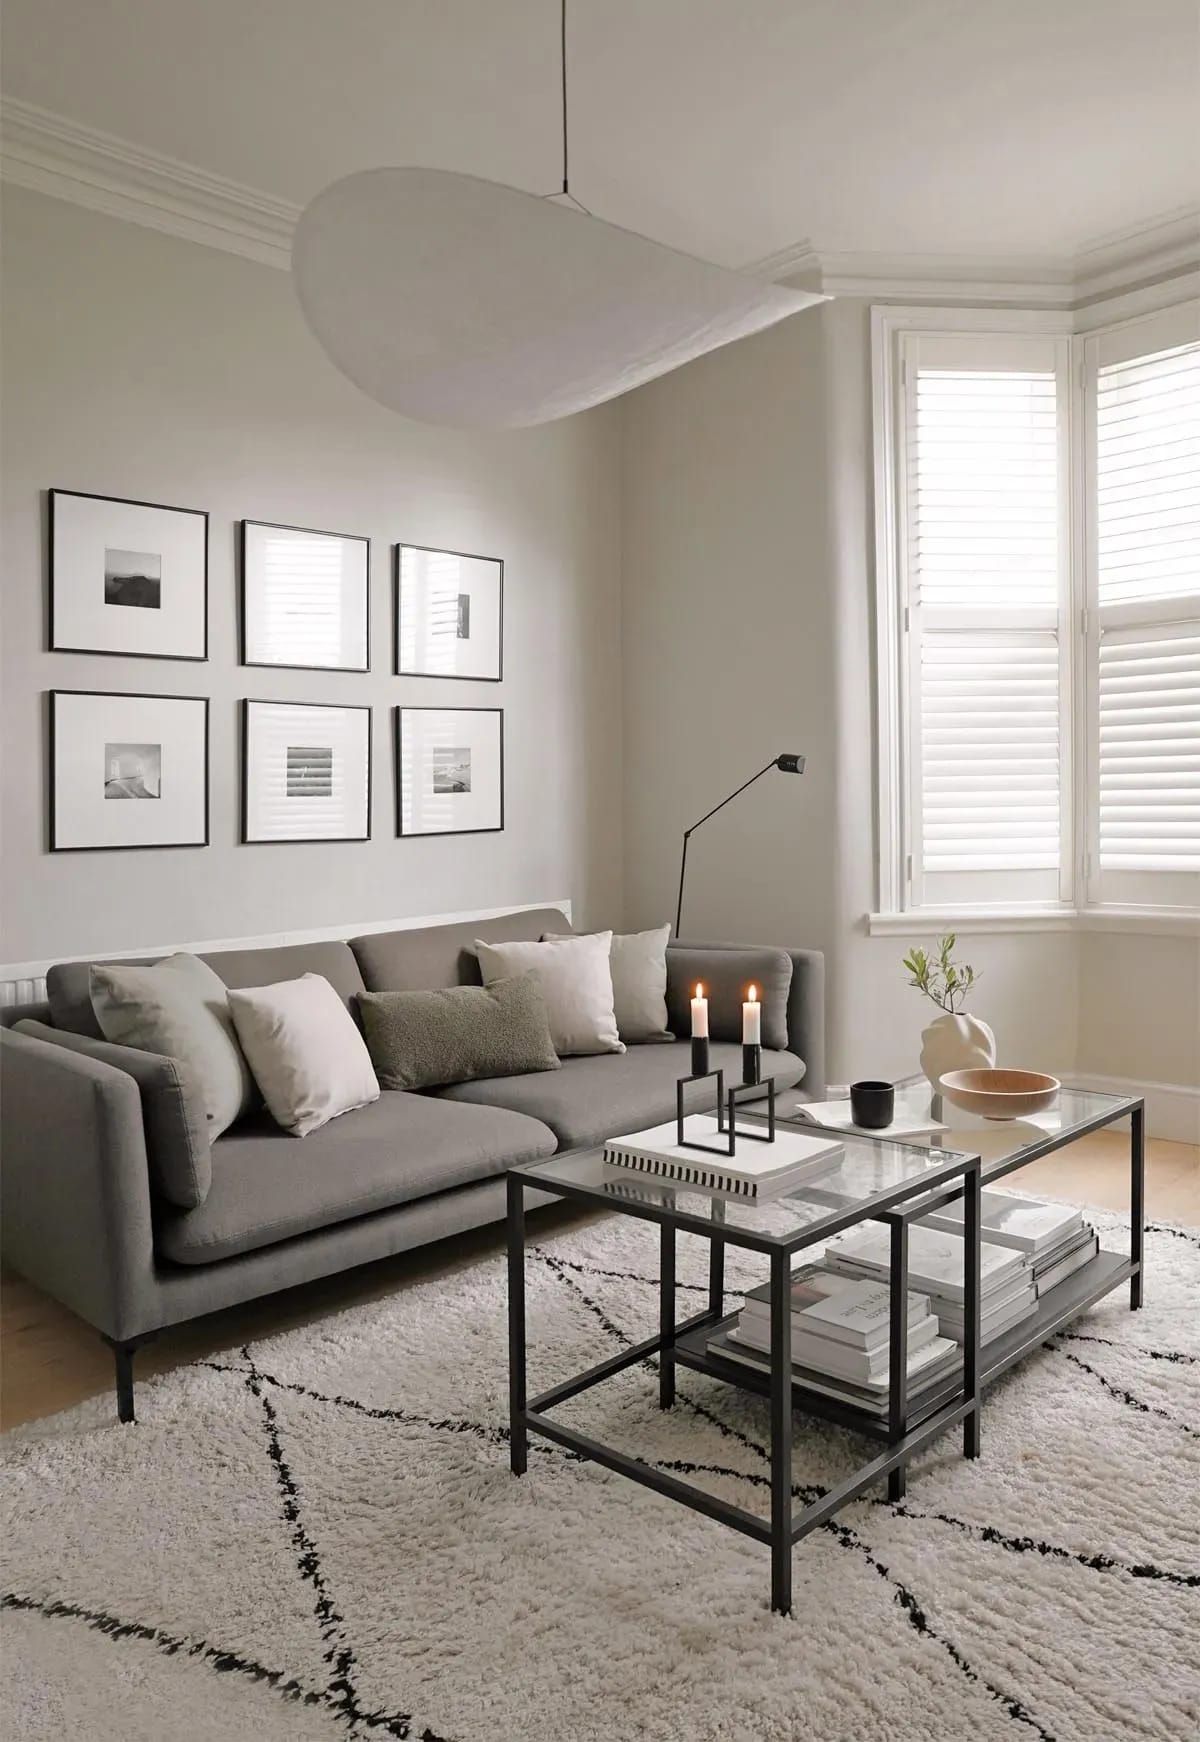 Grey leather sofa – a lavish interior
  decorating thing